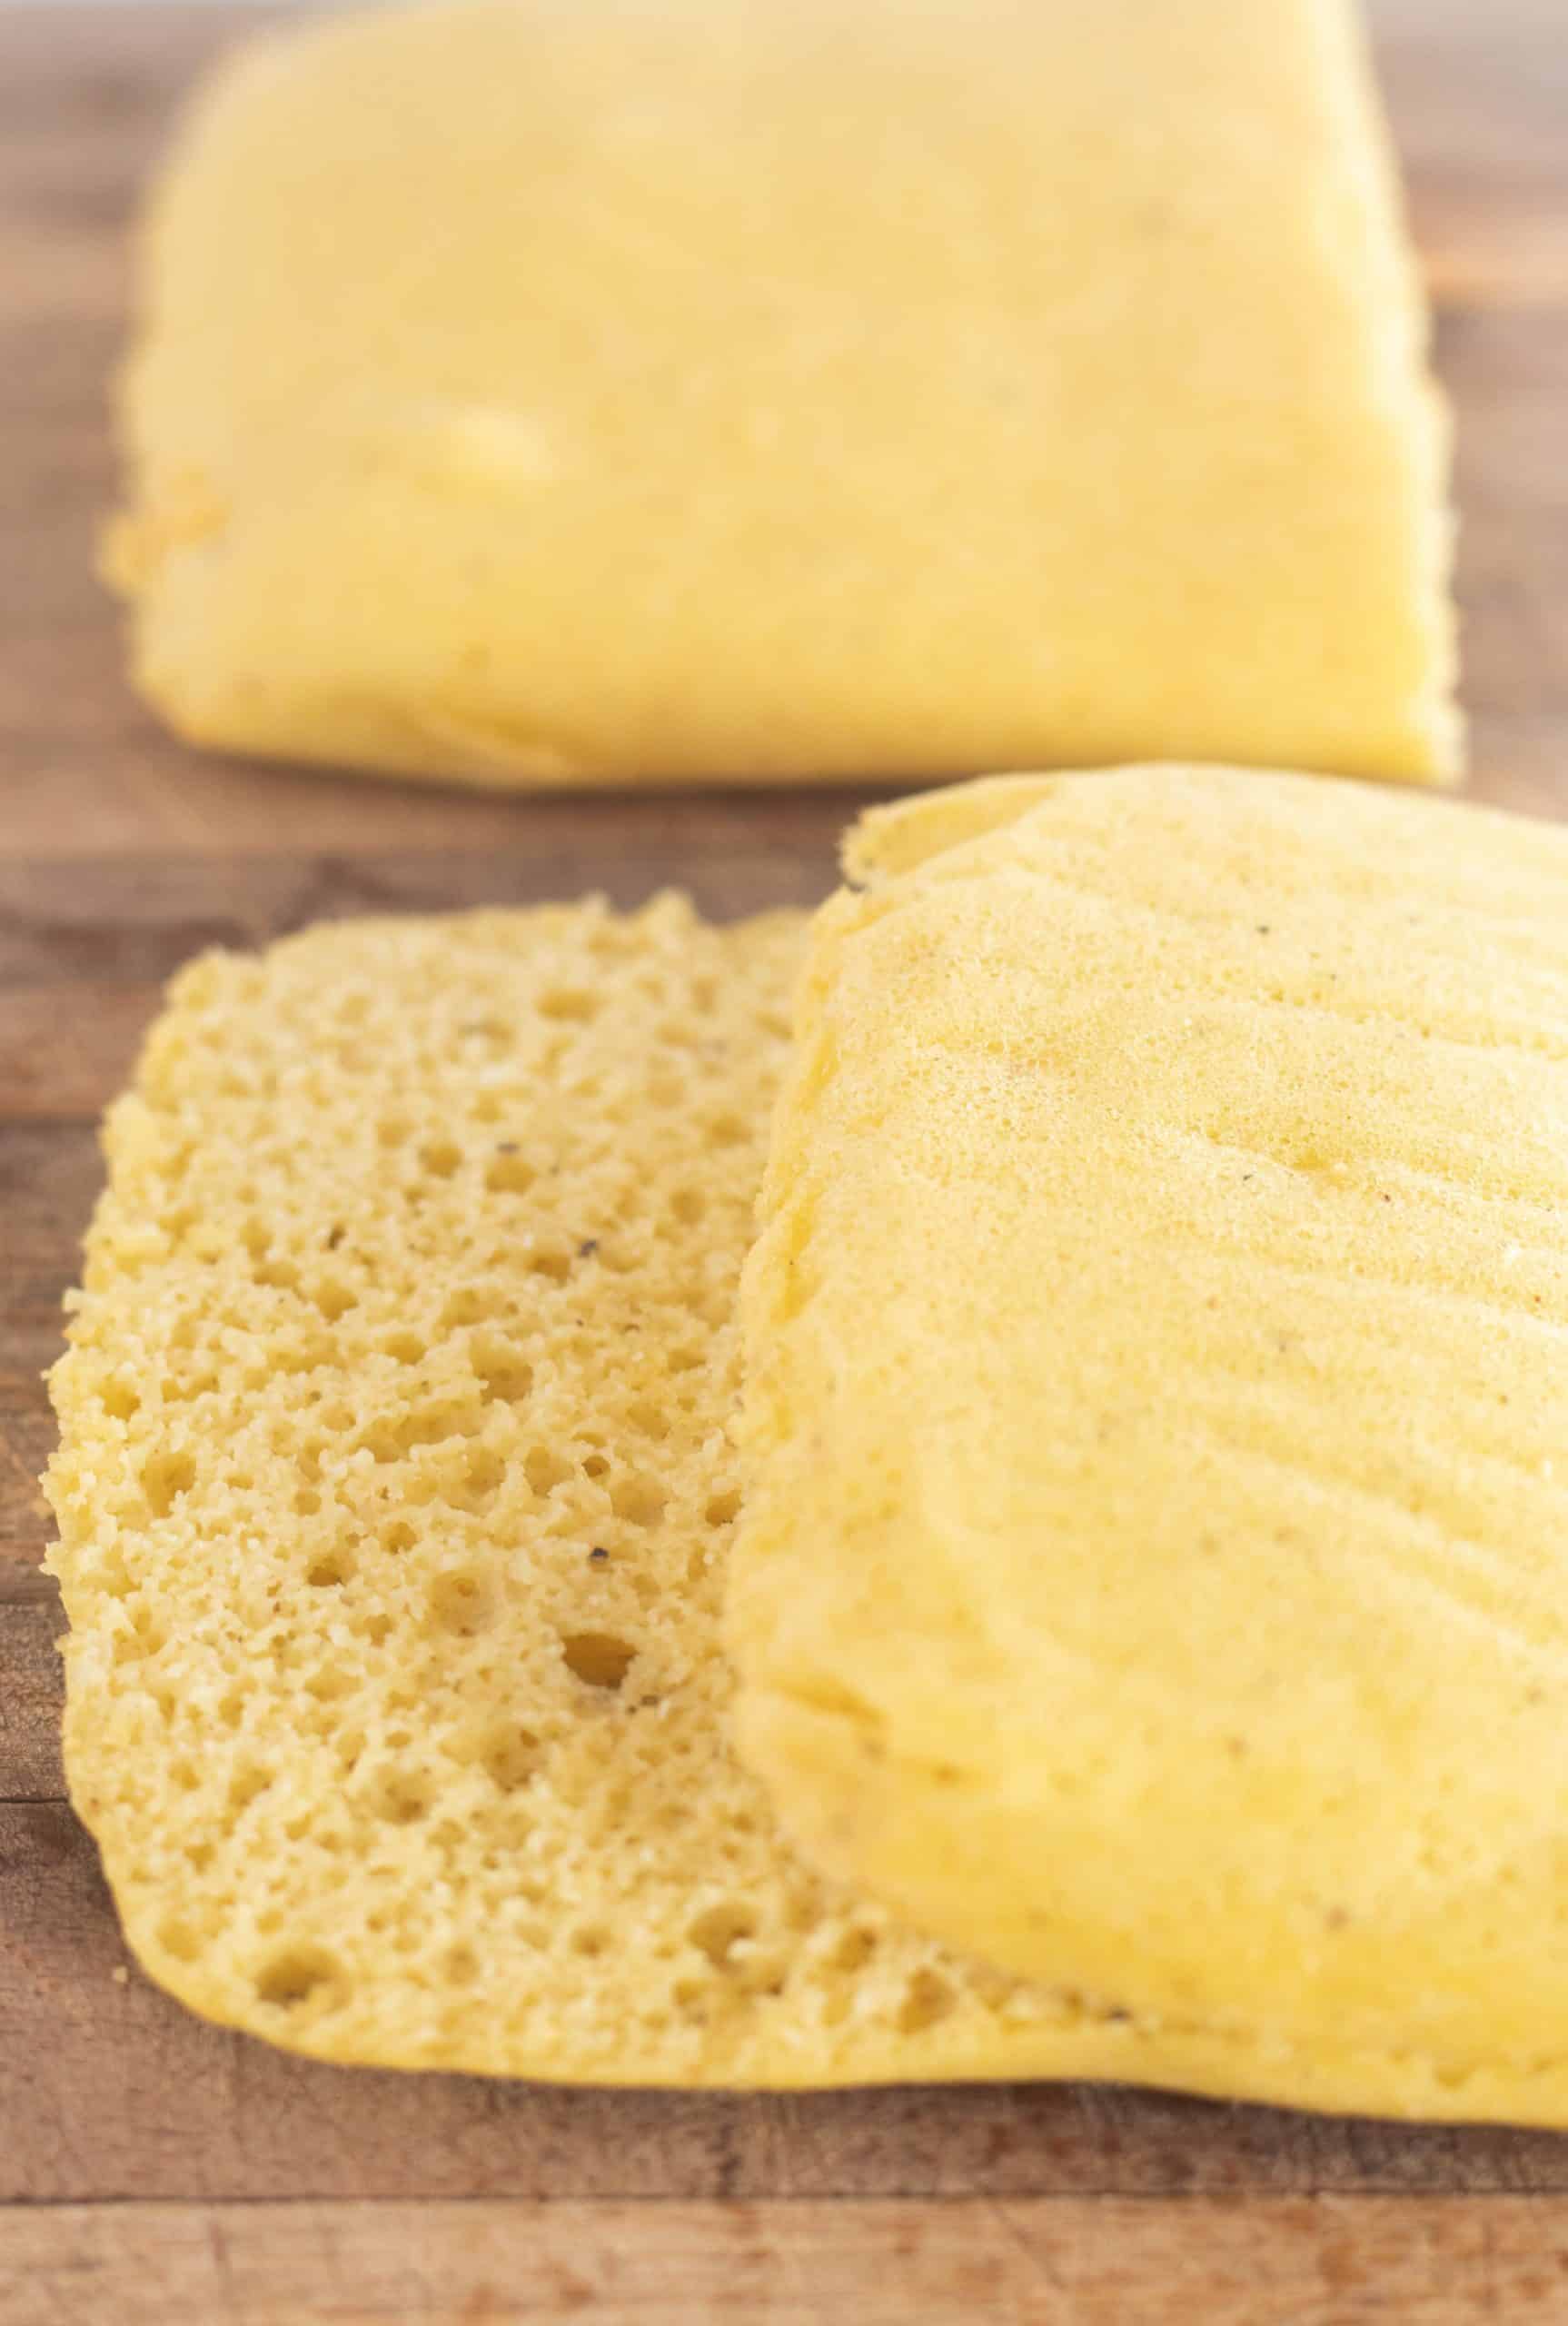 close up the bread cut into sandwich slices